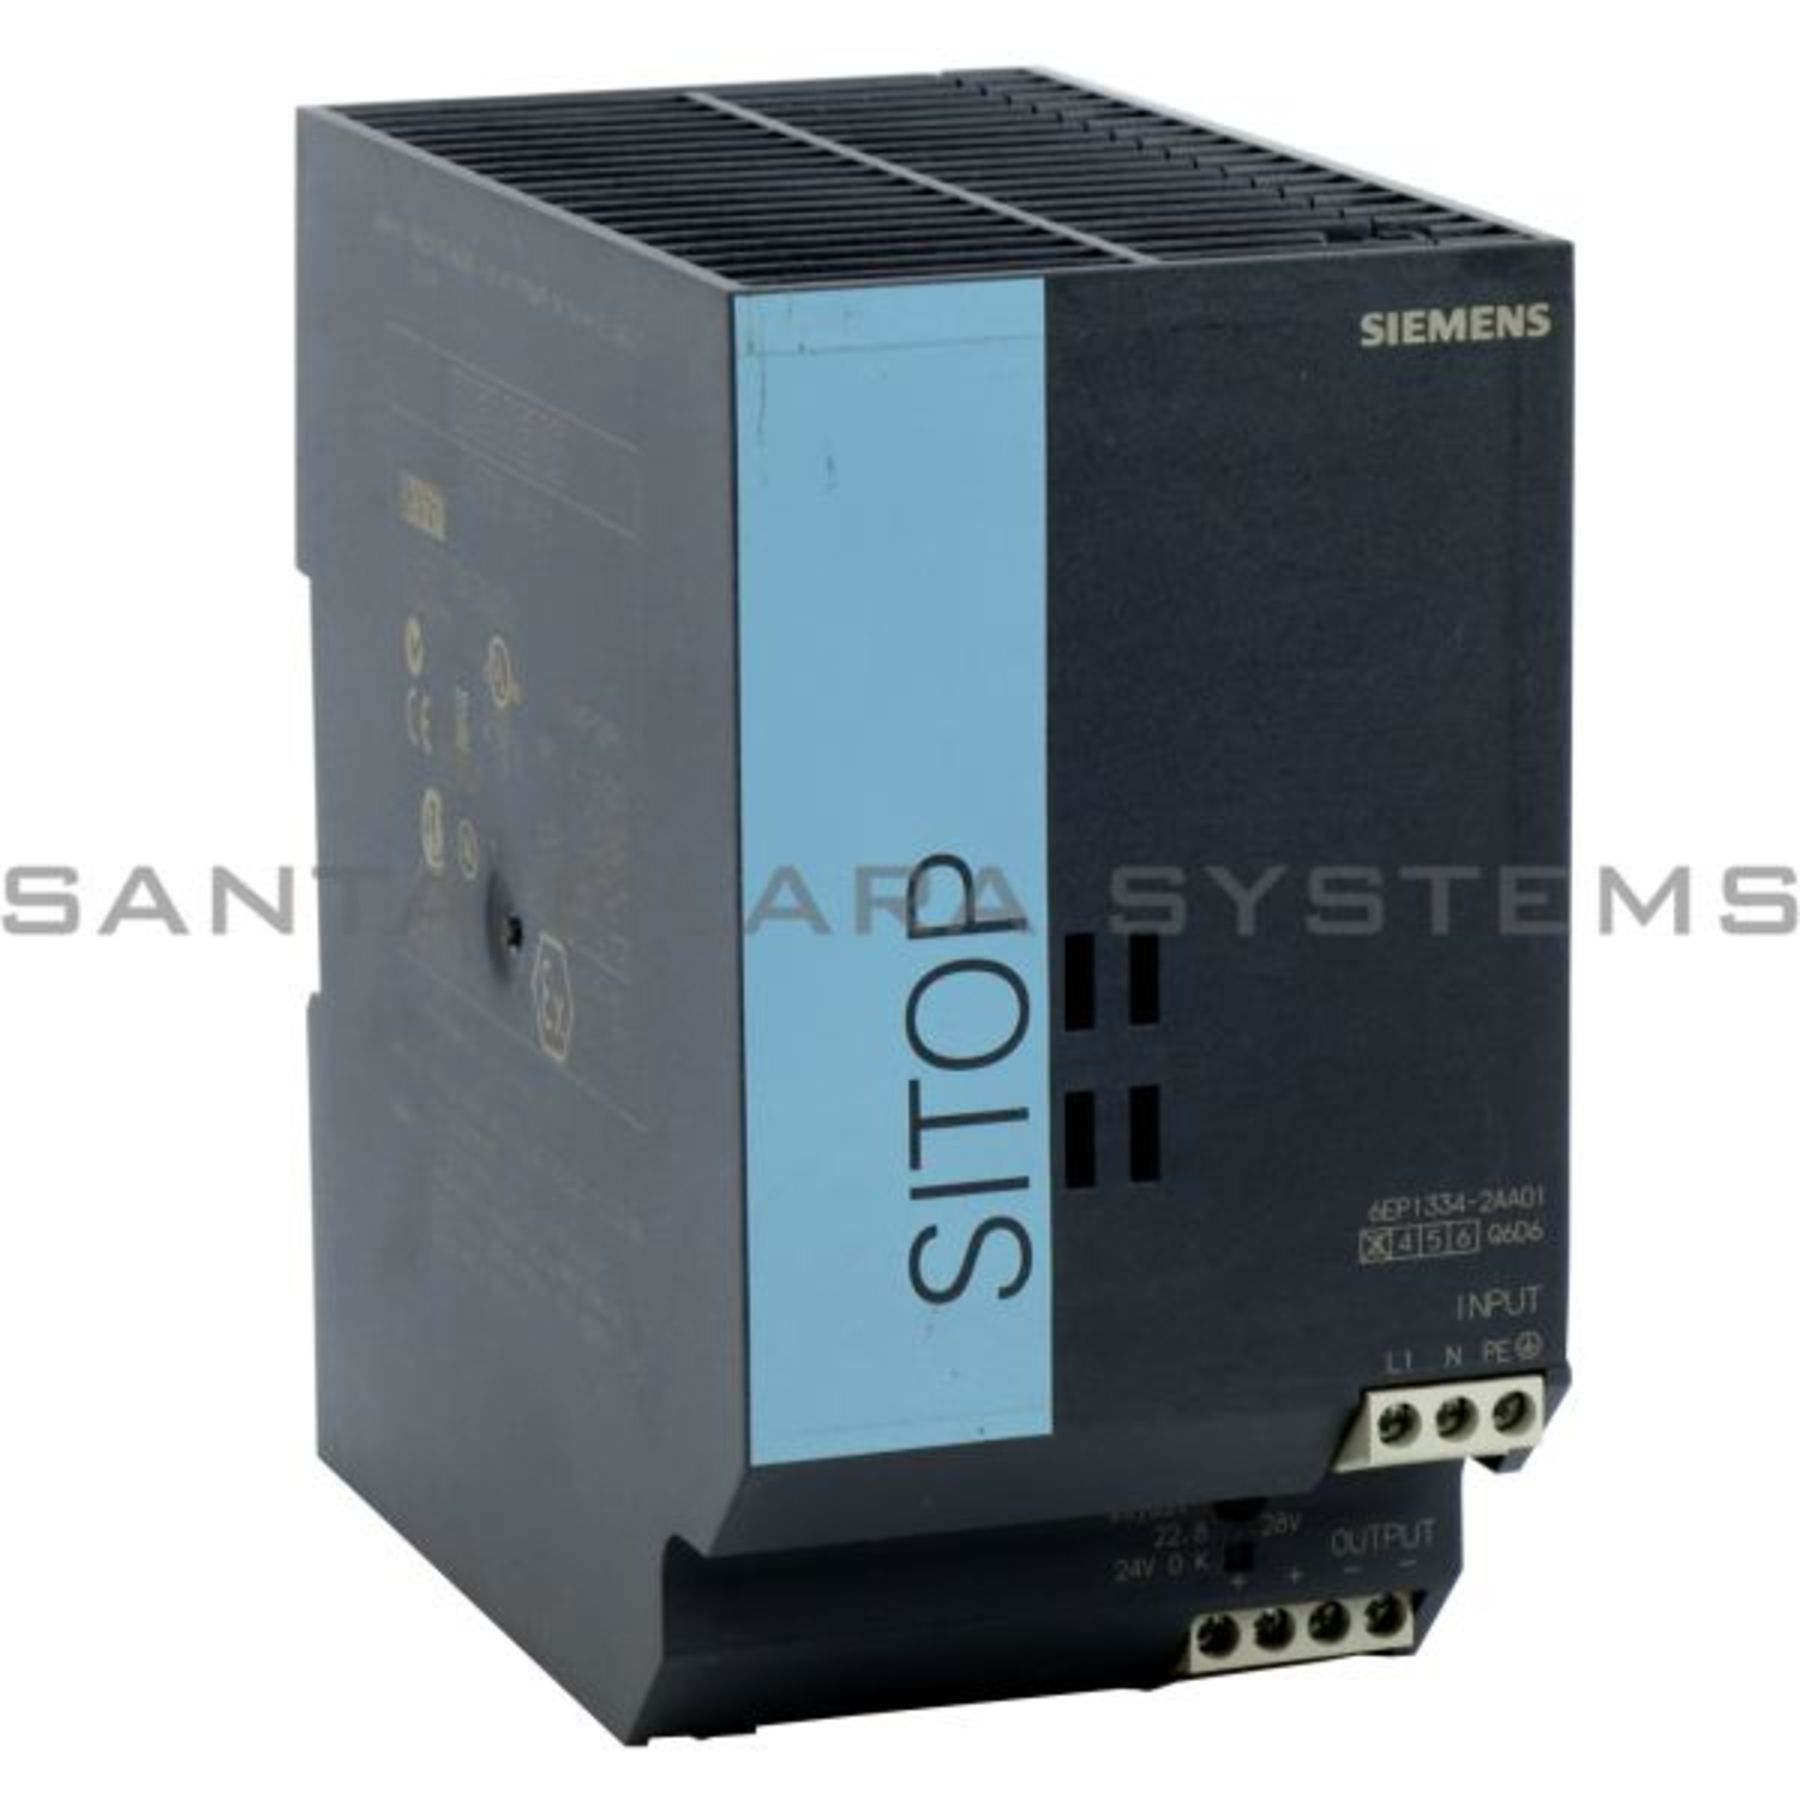 Siemens SITOP Smart 10A 1 P 6EP 1334-2BA01 Power Supply 